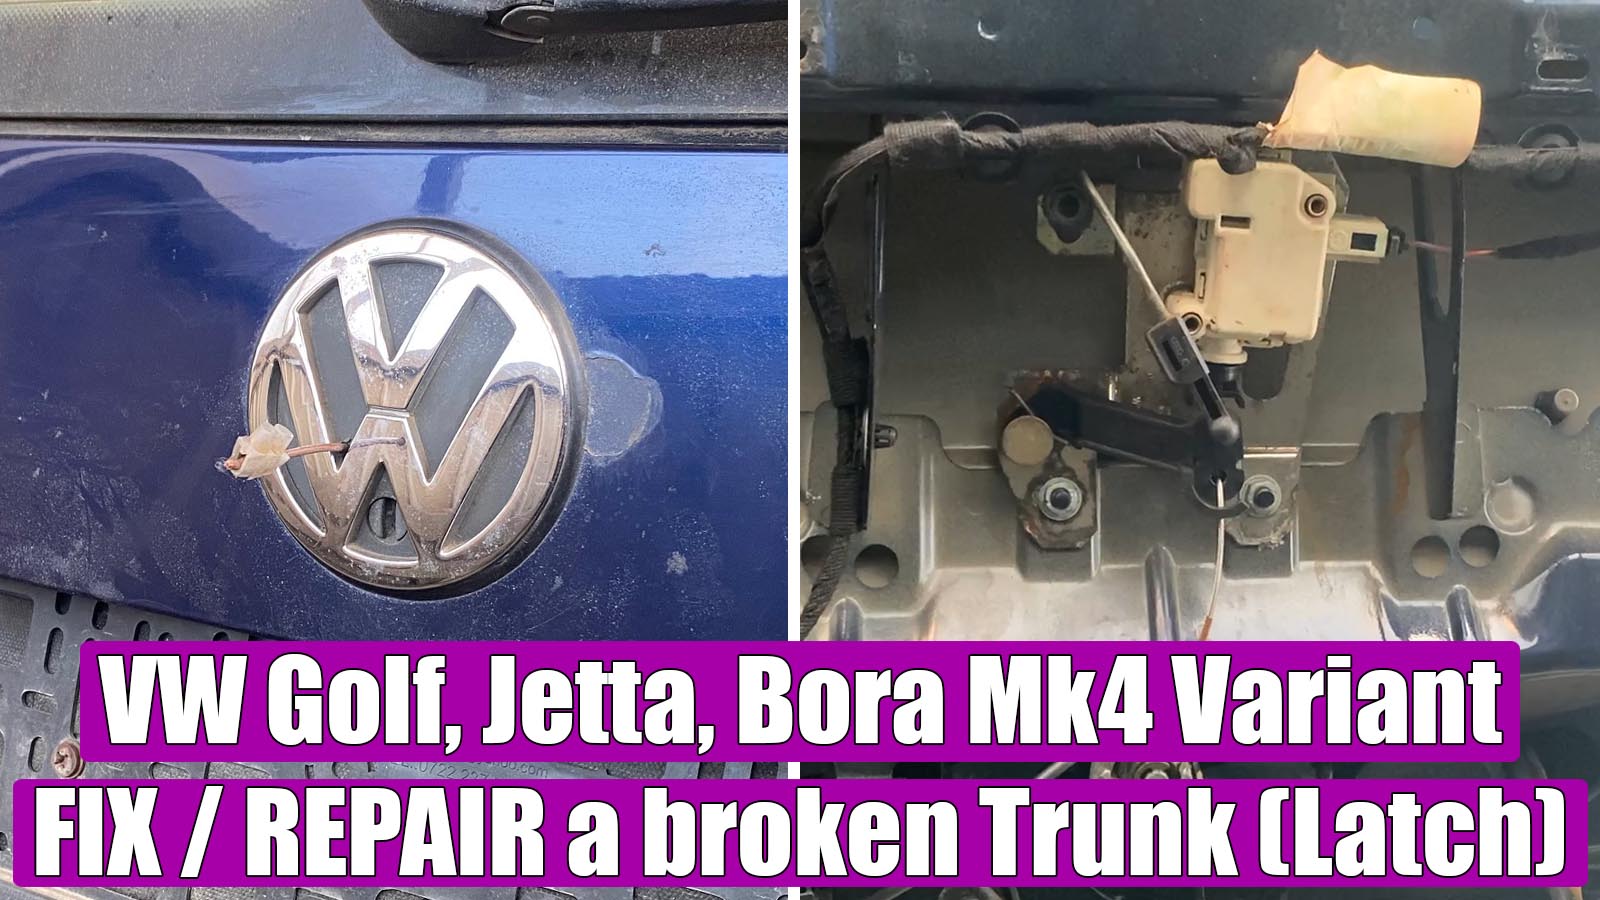 George Stevenson Botany Objection How to FIX broken Trunk / Tailgate on VW Golf 4, Mk4, Jetta, Bora Variant